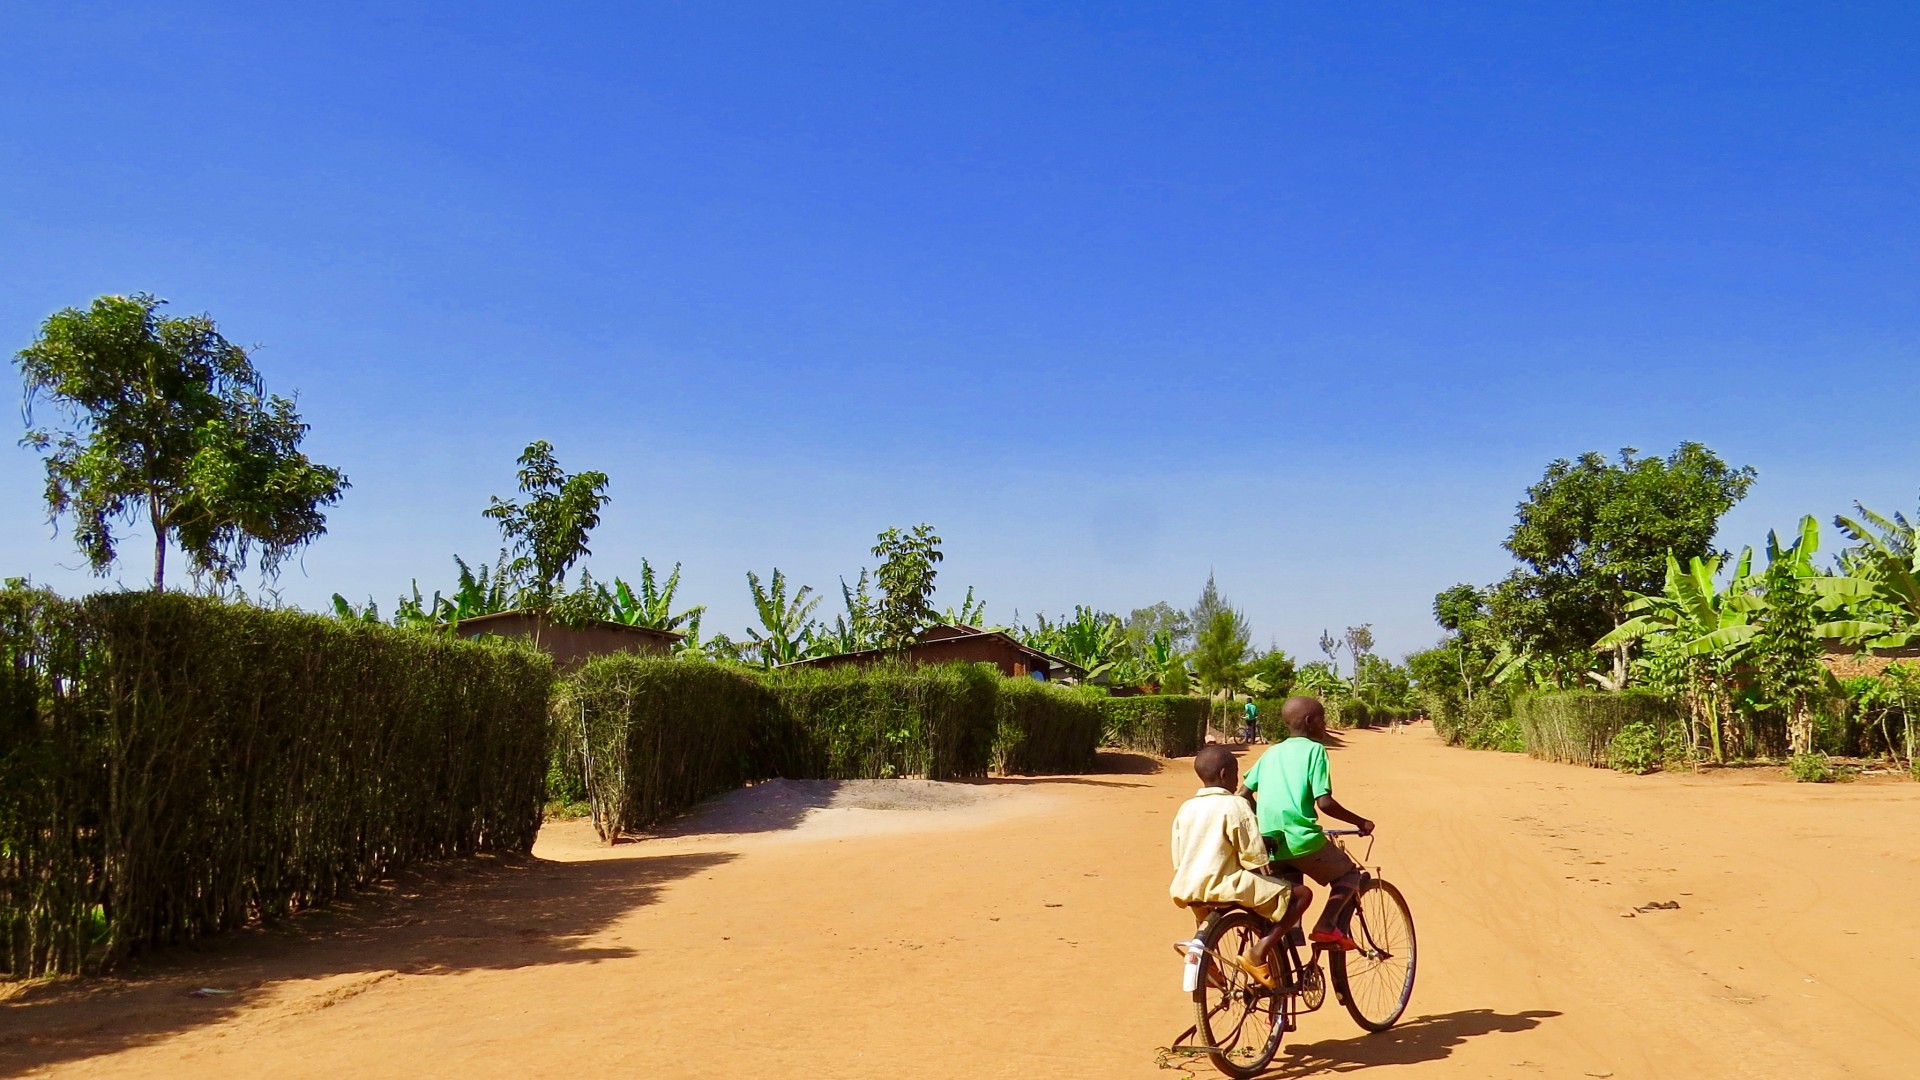 Two local kids riding a bike in a village in Rwanda 